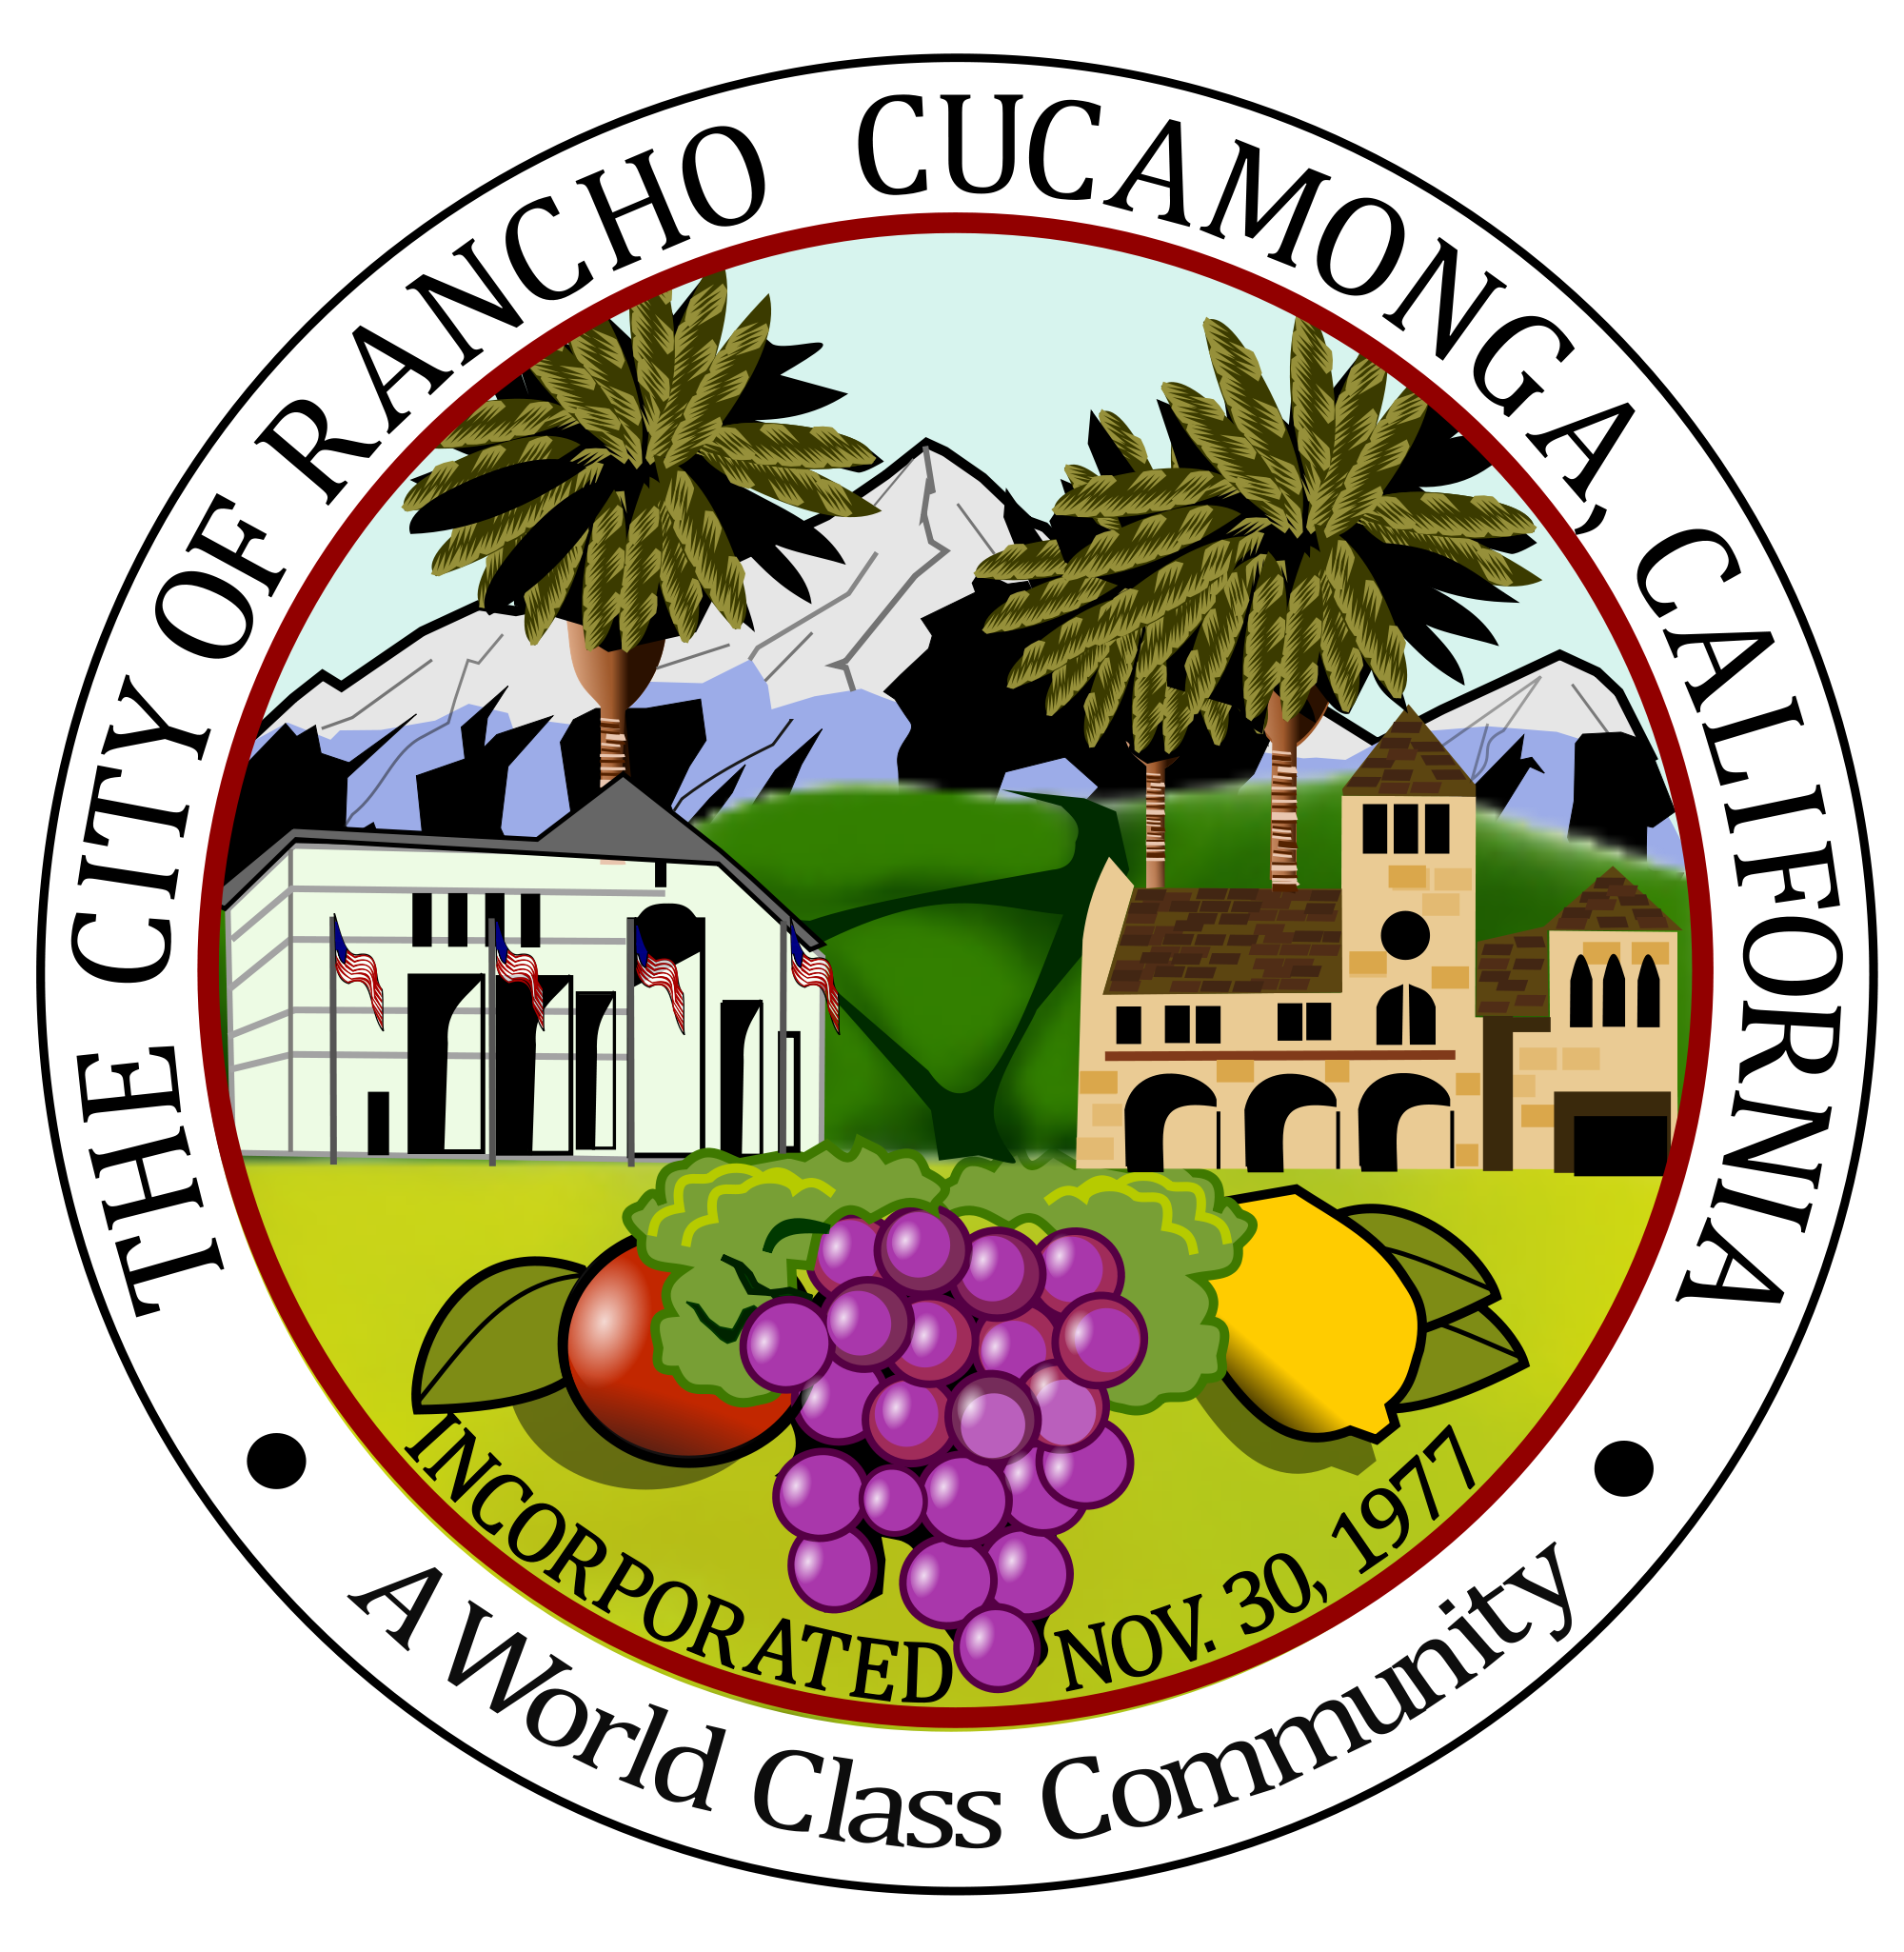 Rancho Cucamonga, California Mailing Lists